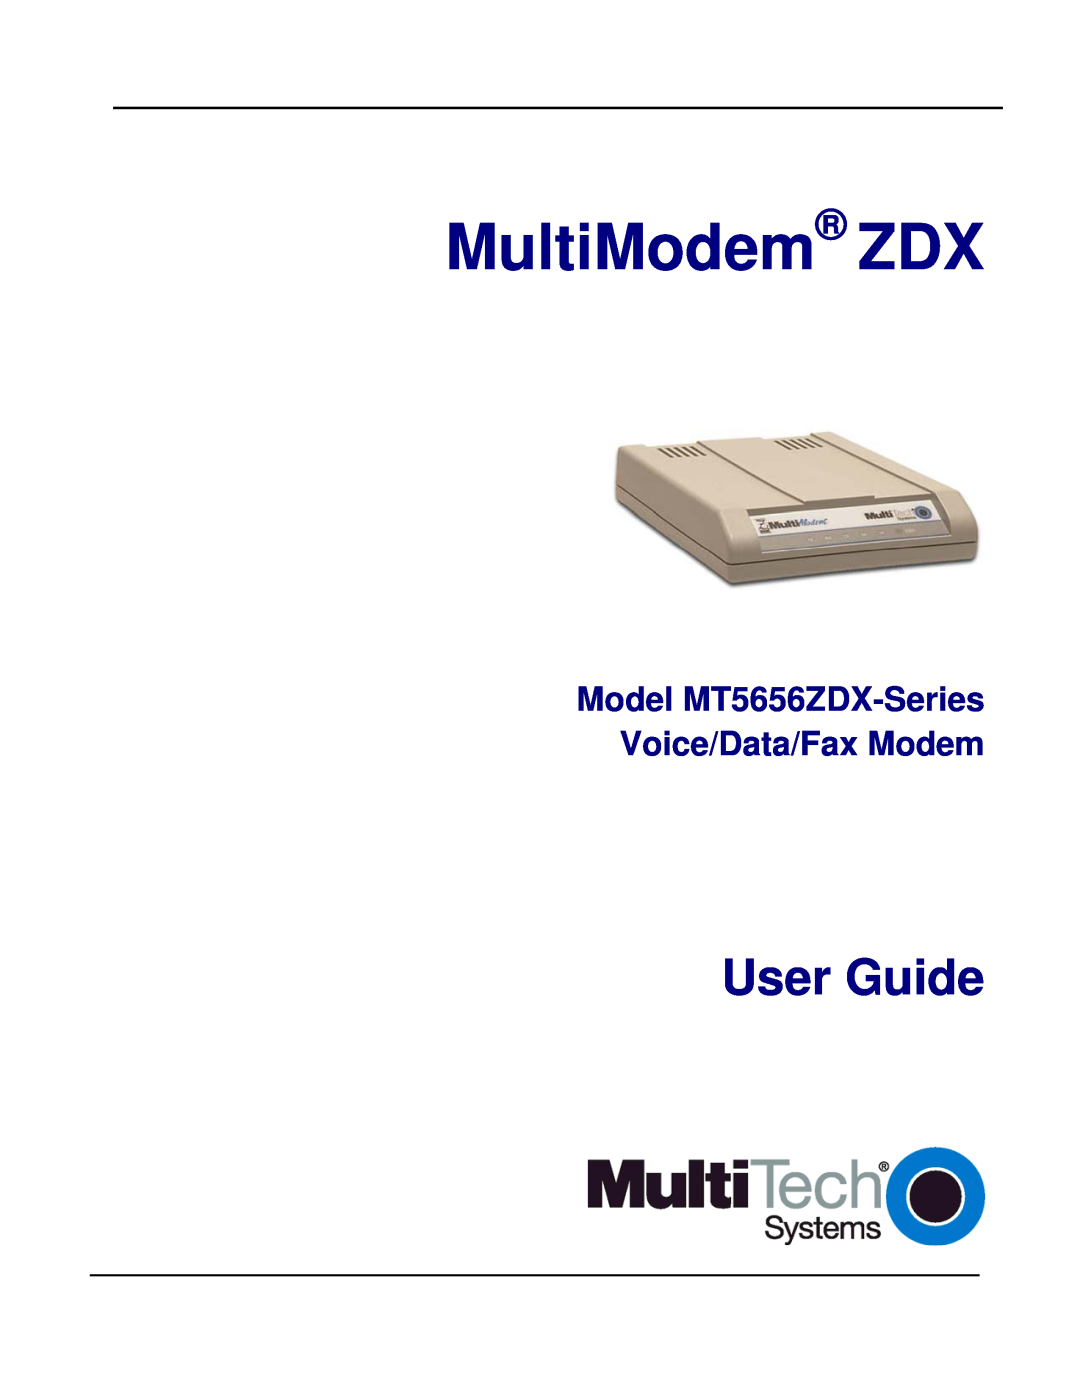 Multi Tech Equipment manual MultiModem ZDX, User Guide, Model MT5656ZDX-Series Voice/Data/Fax Modem 